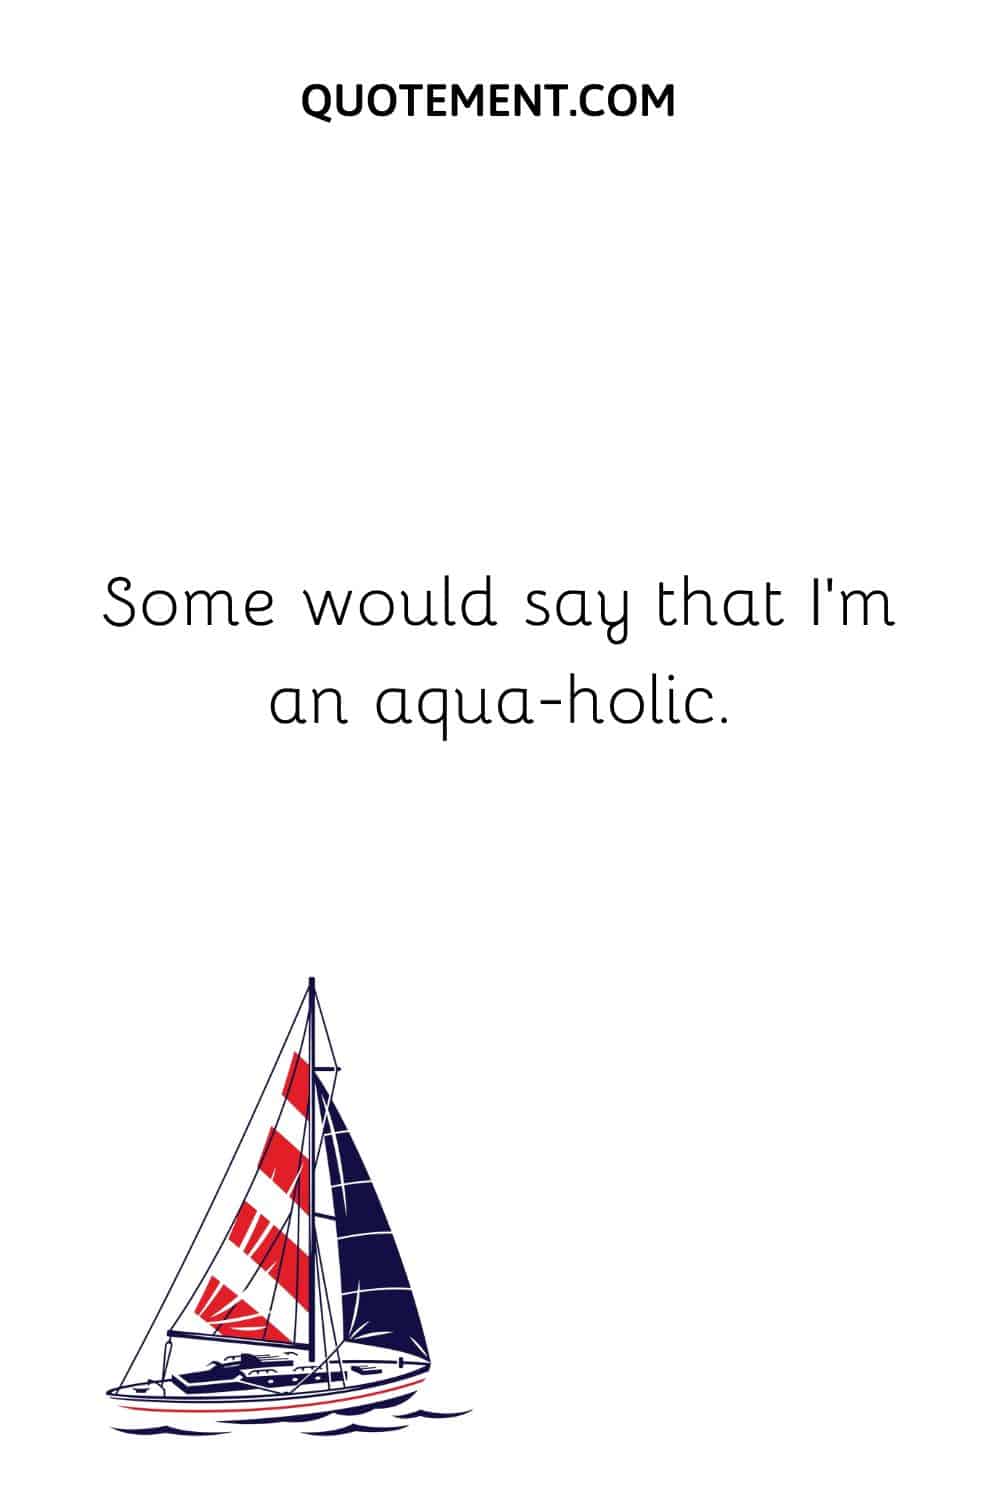 Some would say that I’m an aqua-holic